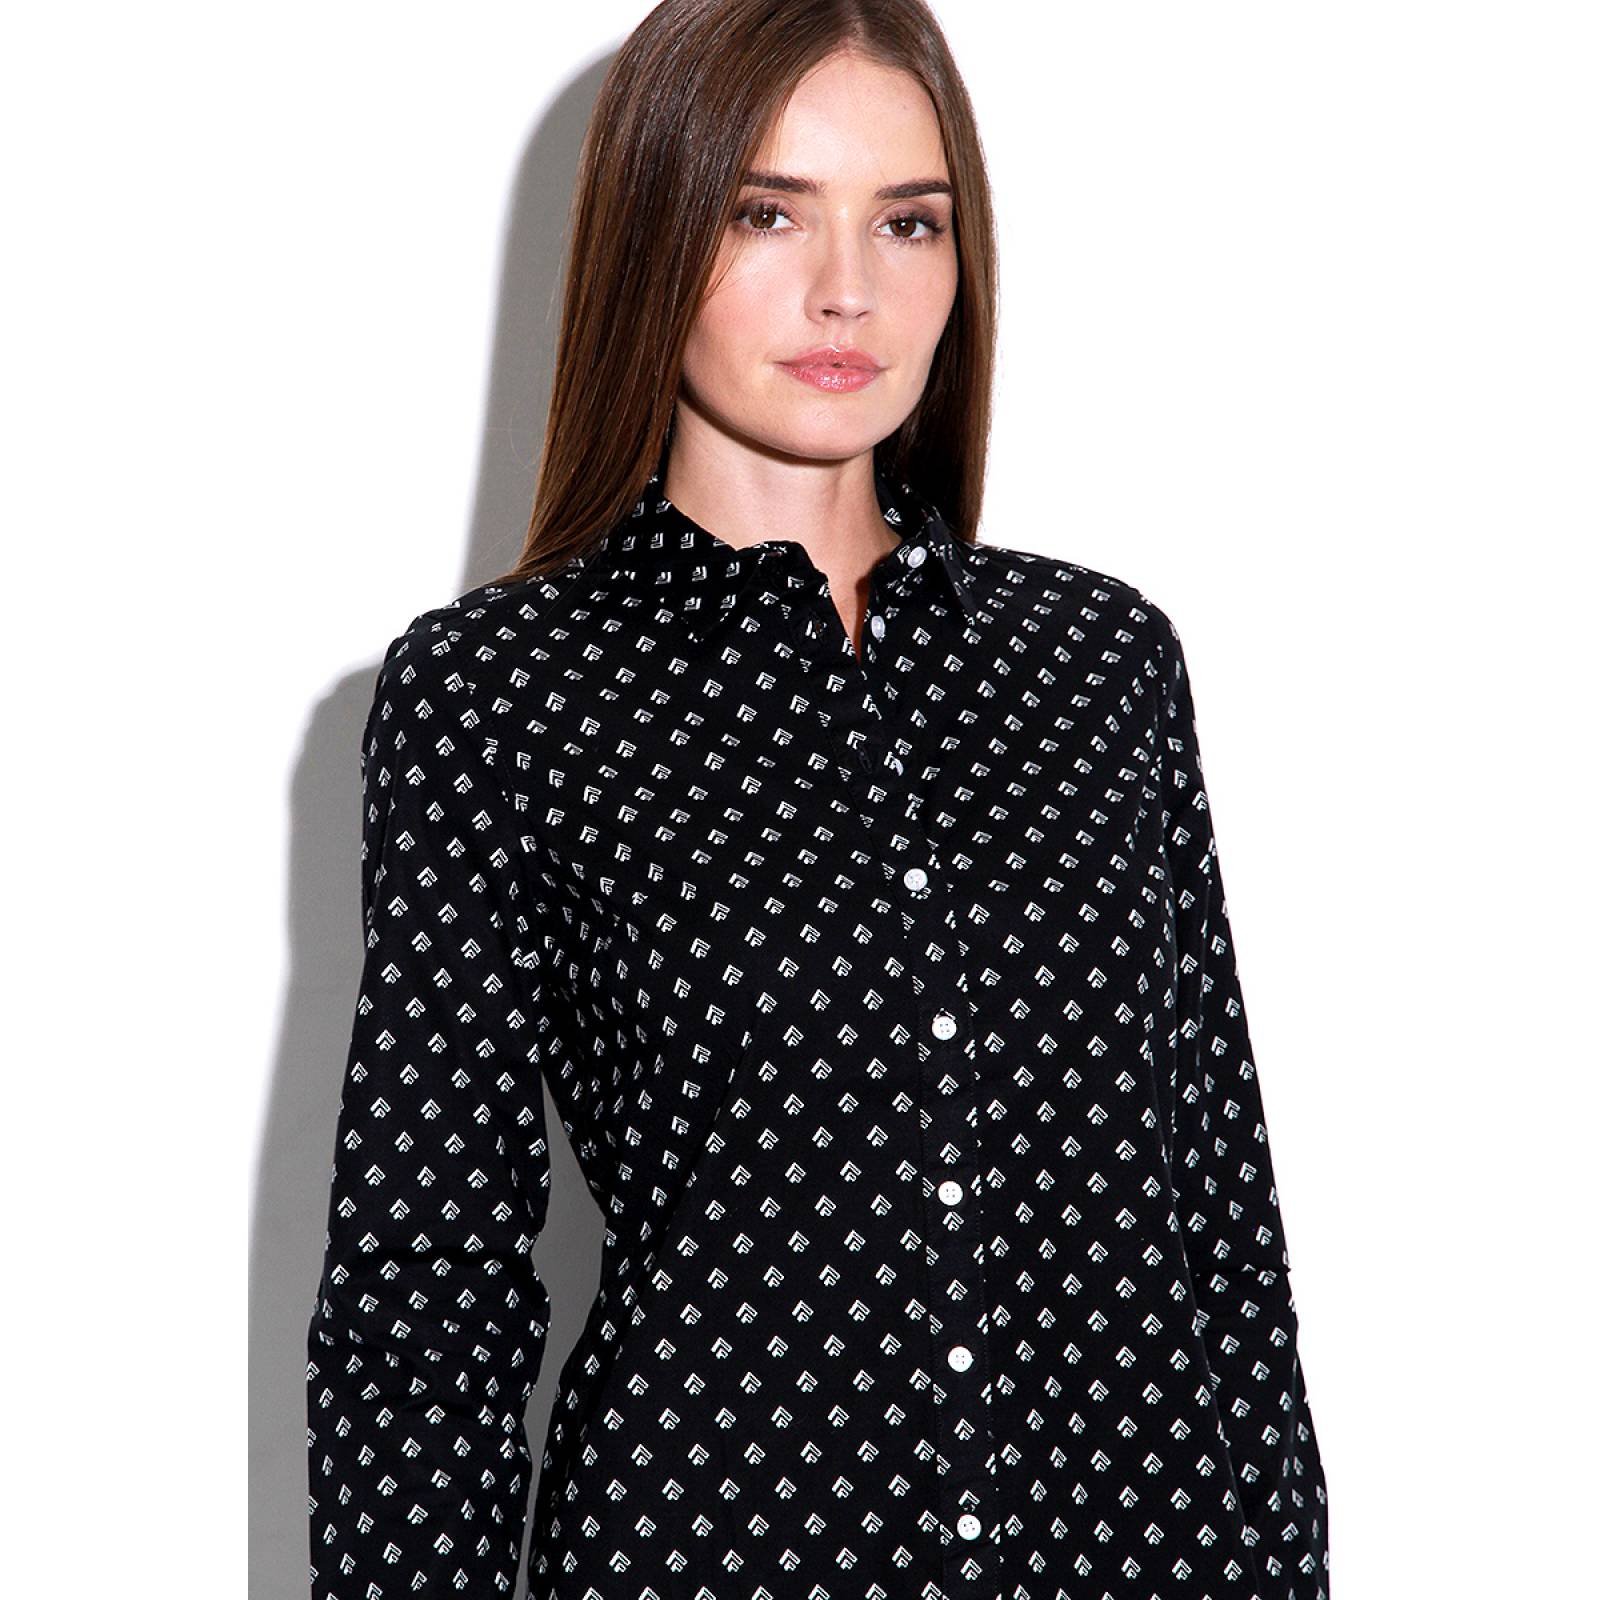 Blusa Tailored Etch Shirt Dockers para Dama